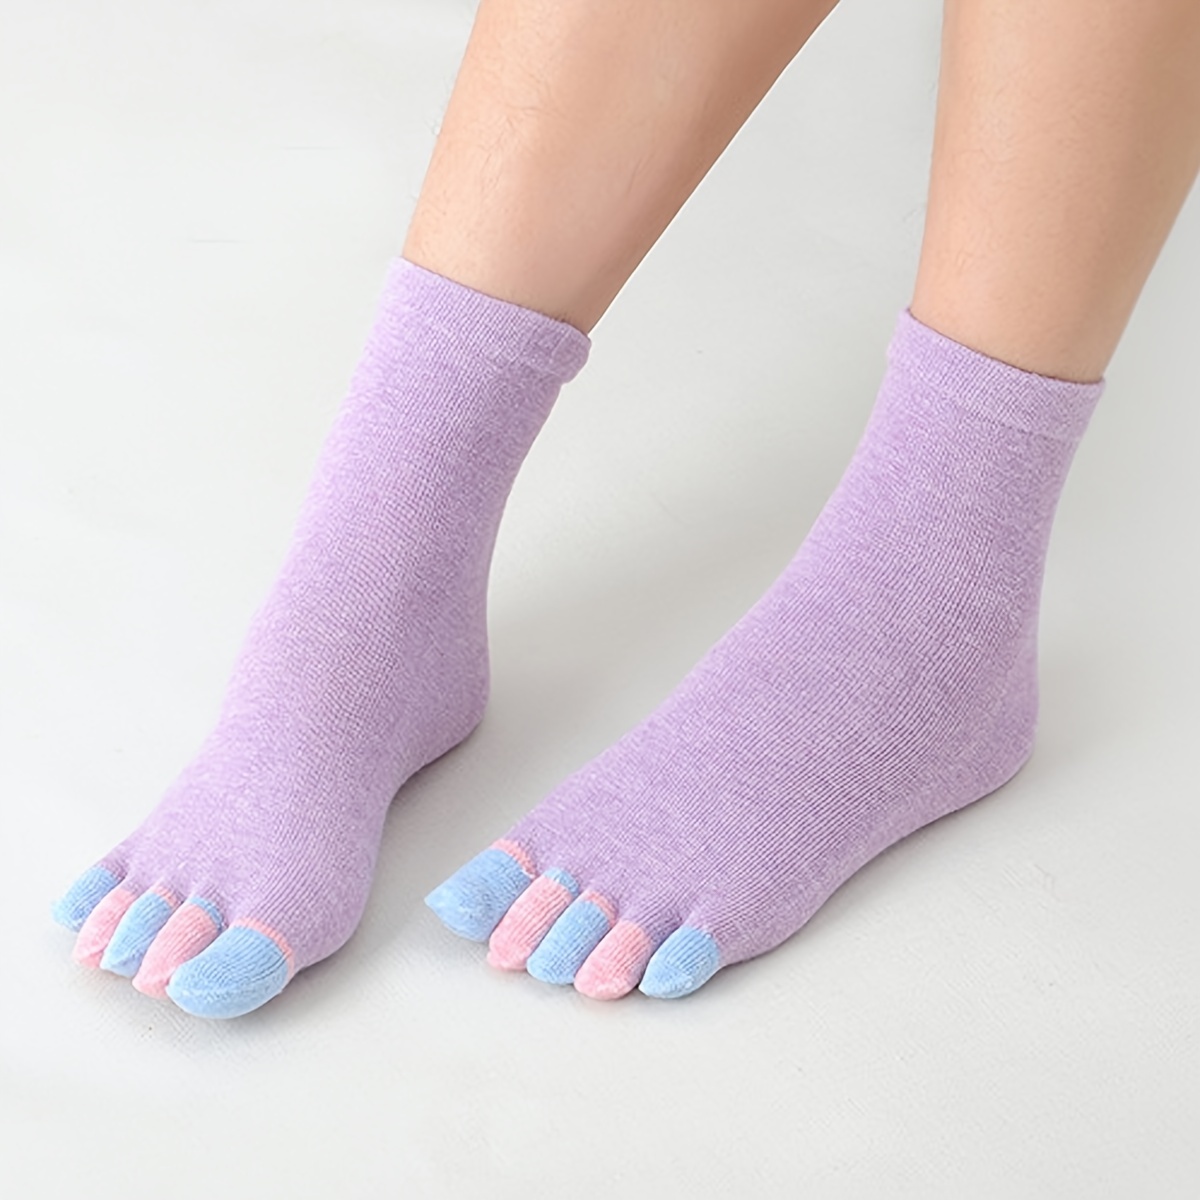 Short Five Toe Socks Cotton, Socks Men Thin Five Fingers